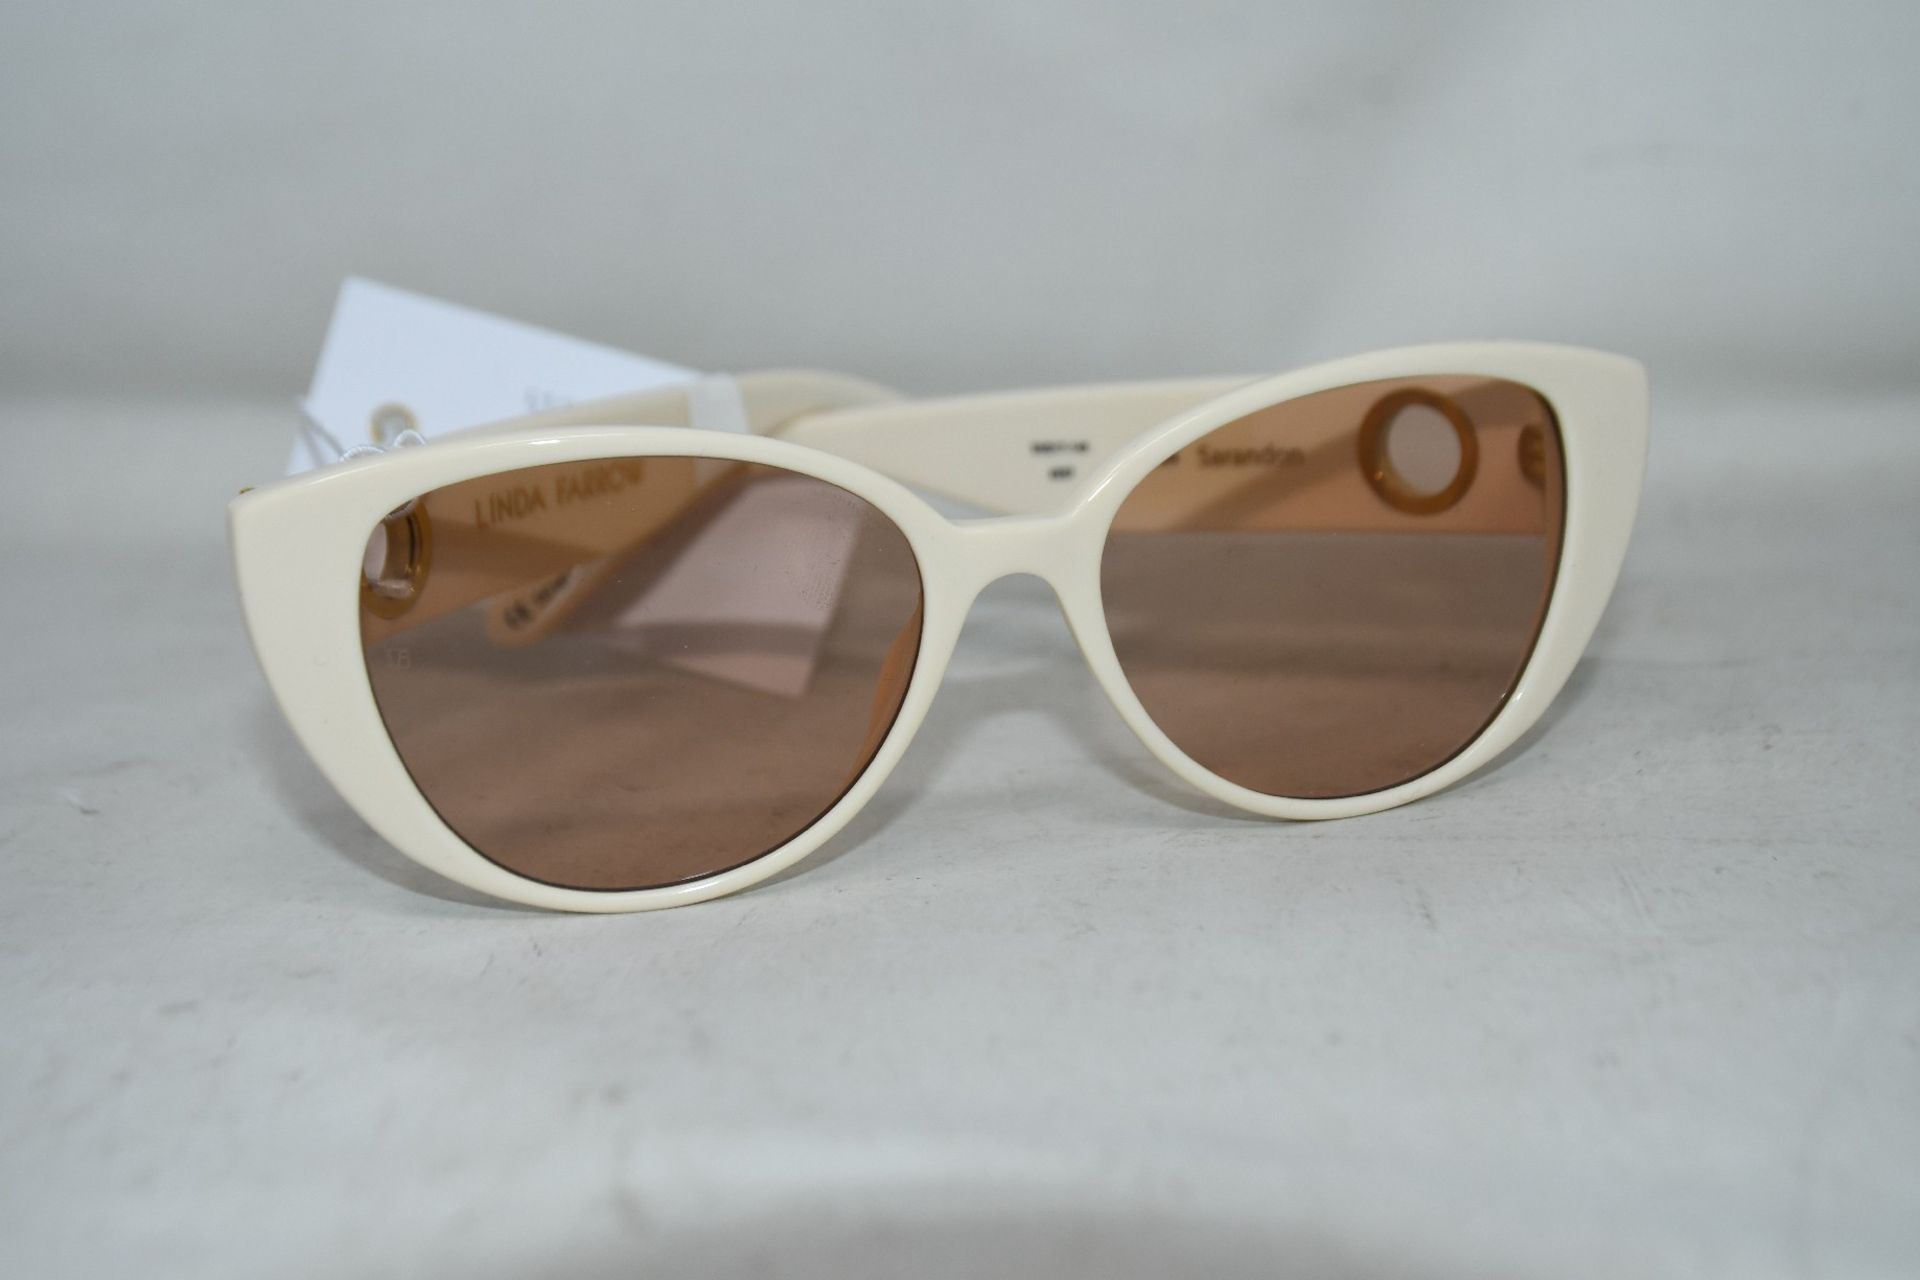 A pair of as new Linda Farrow Sarandon sunglasses (RRP £385 - no case).